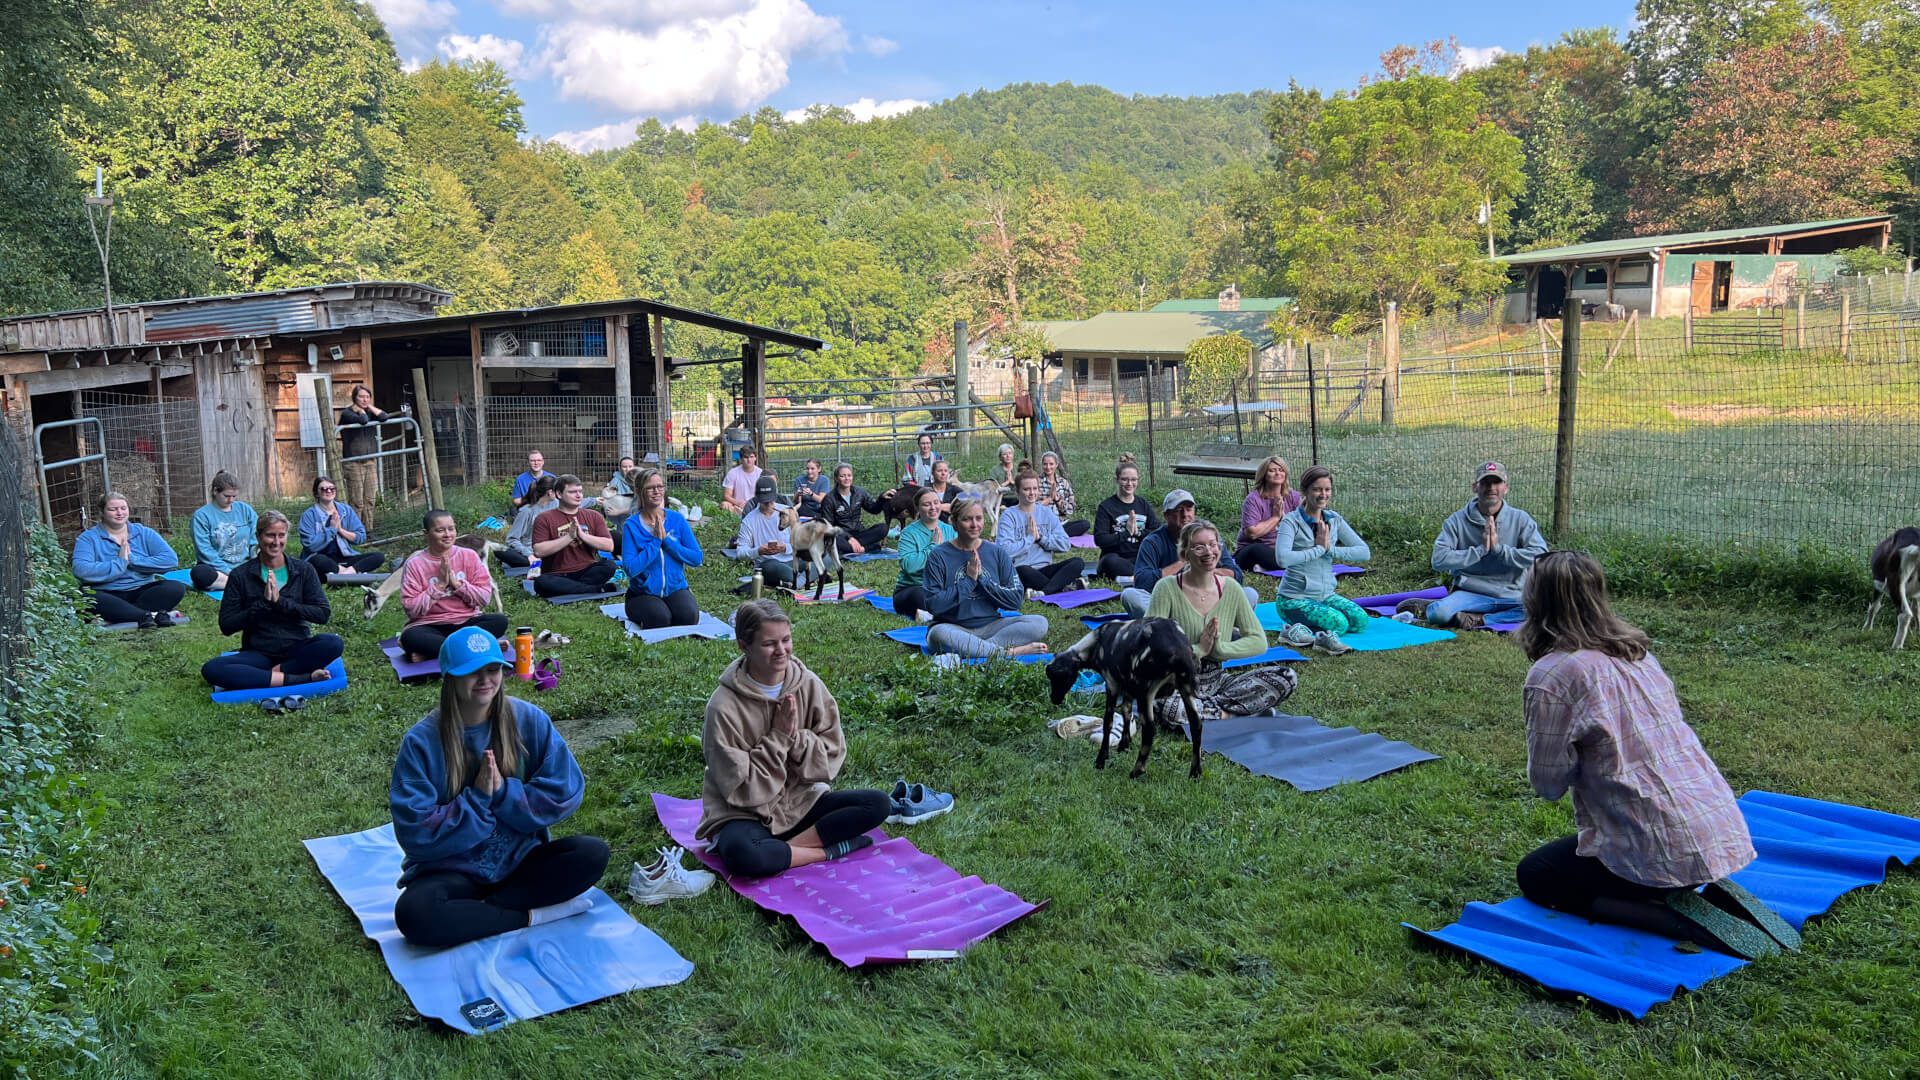 Outdoor goat yoga session at a farm outside Asheville, North Carolina.